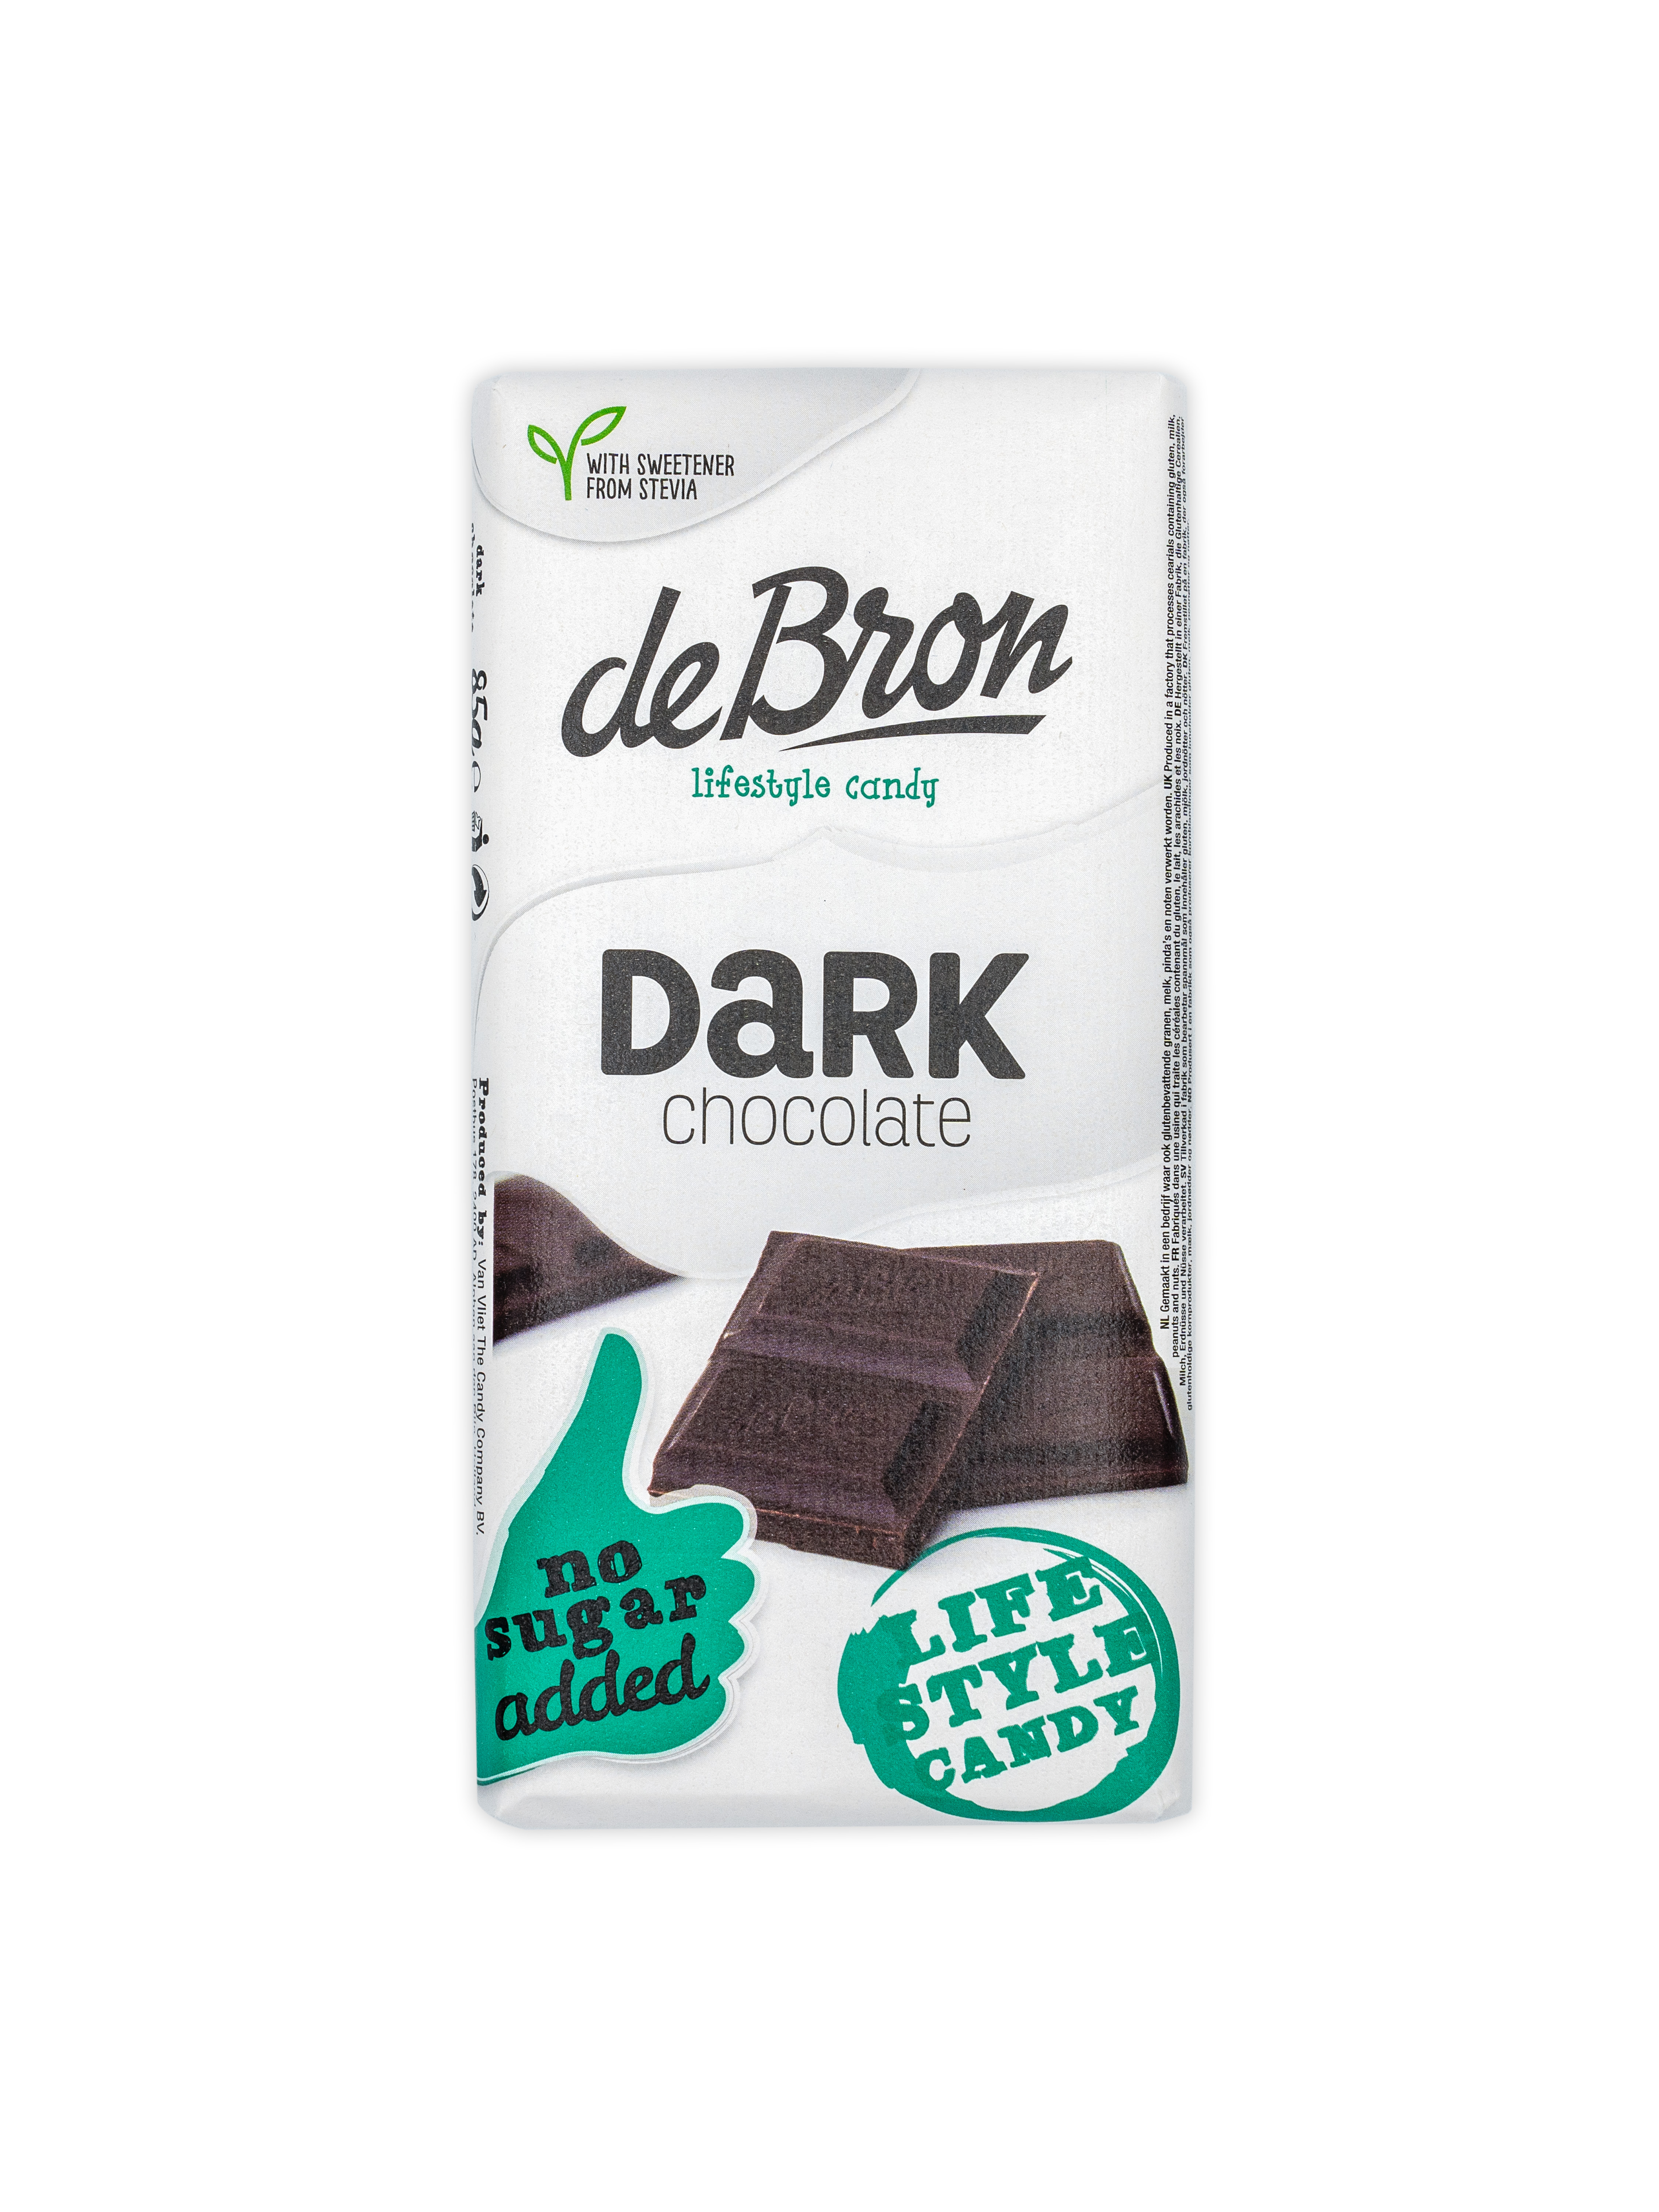 DeBron_Dark Chocolate_front